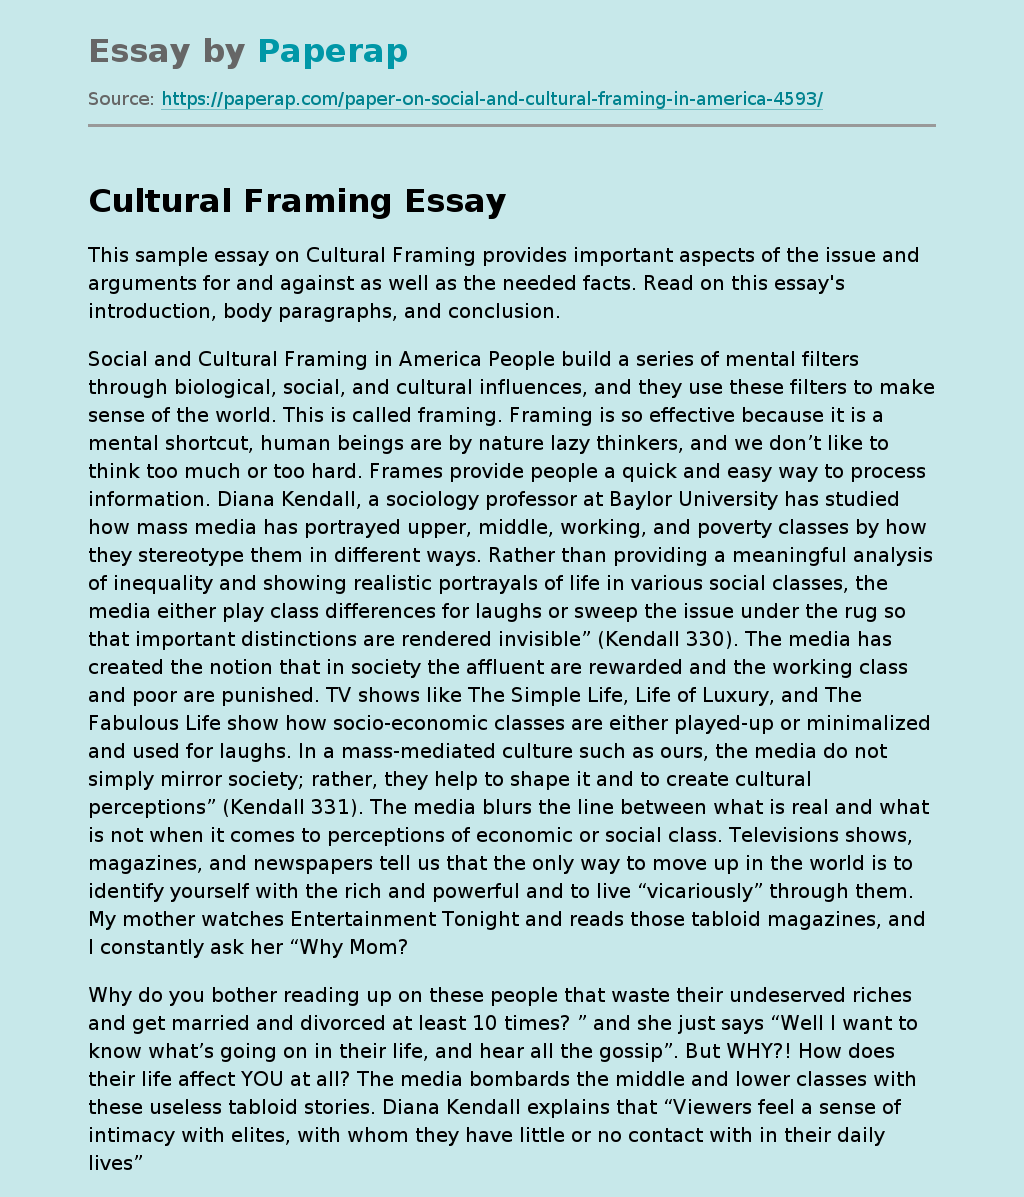 Sample Essay on Cultural Framing